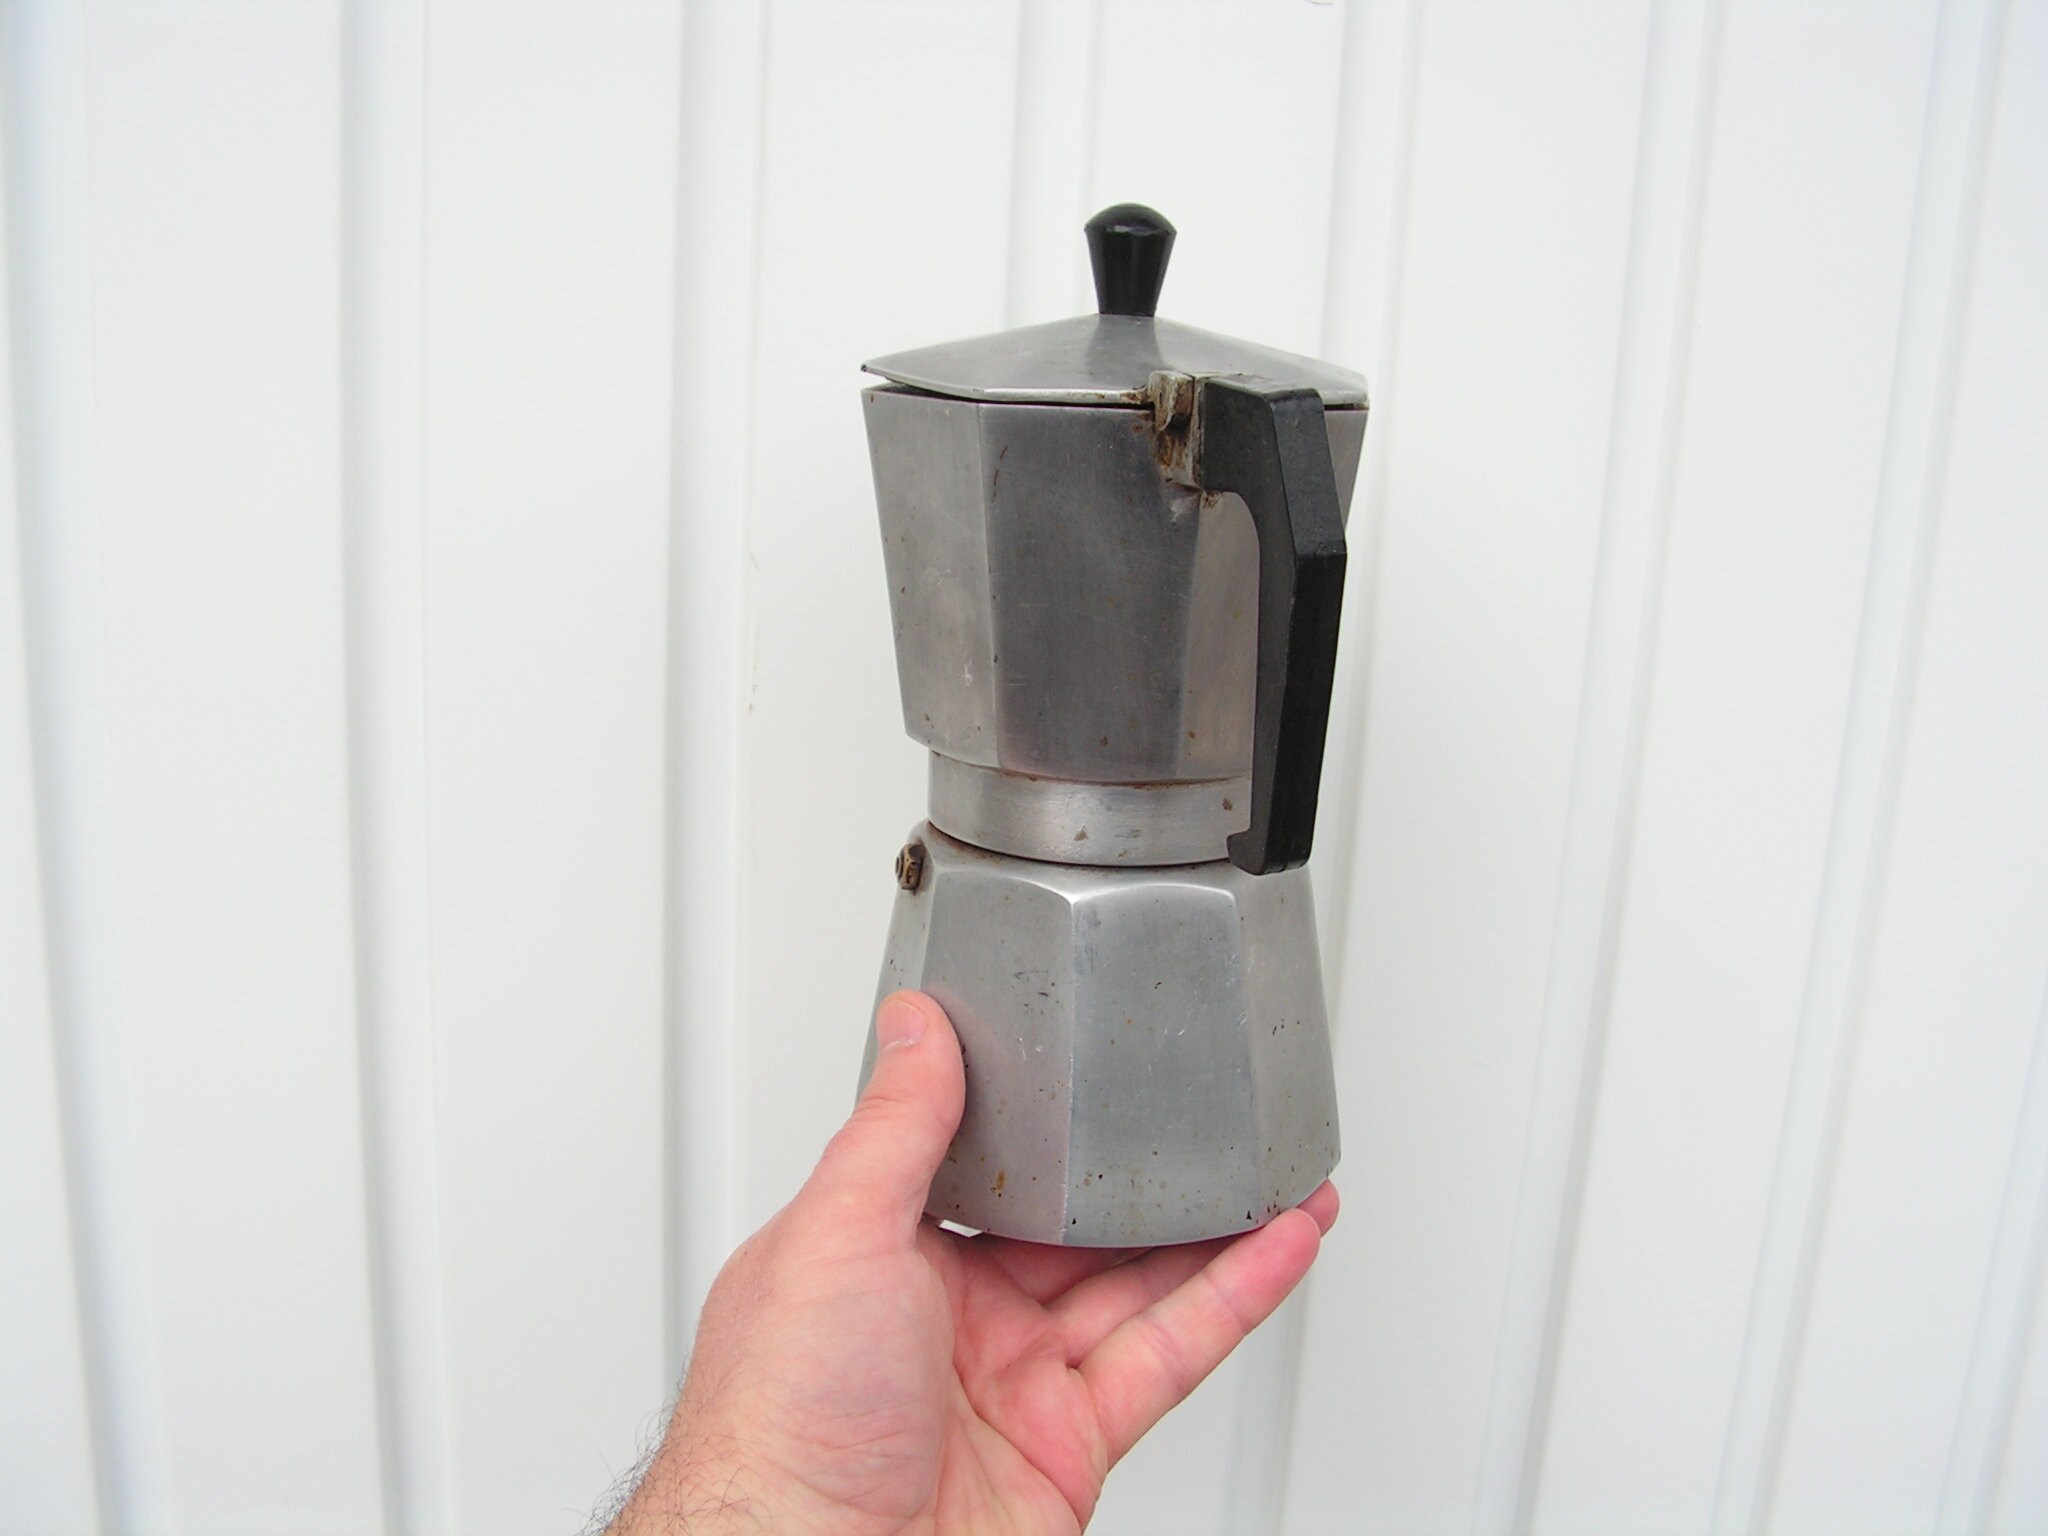 Vintage Coffee Maker for Espresso. Retro Coffee Pot. Camping Coffee  Machine. Metal Coffee Maker, Espresso Pot, 